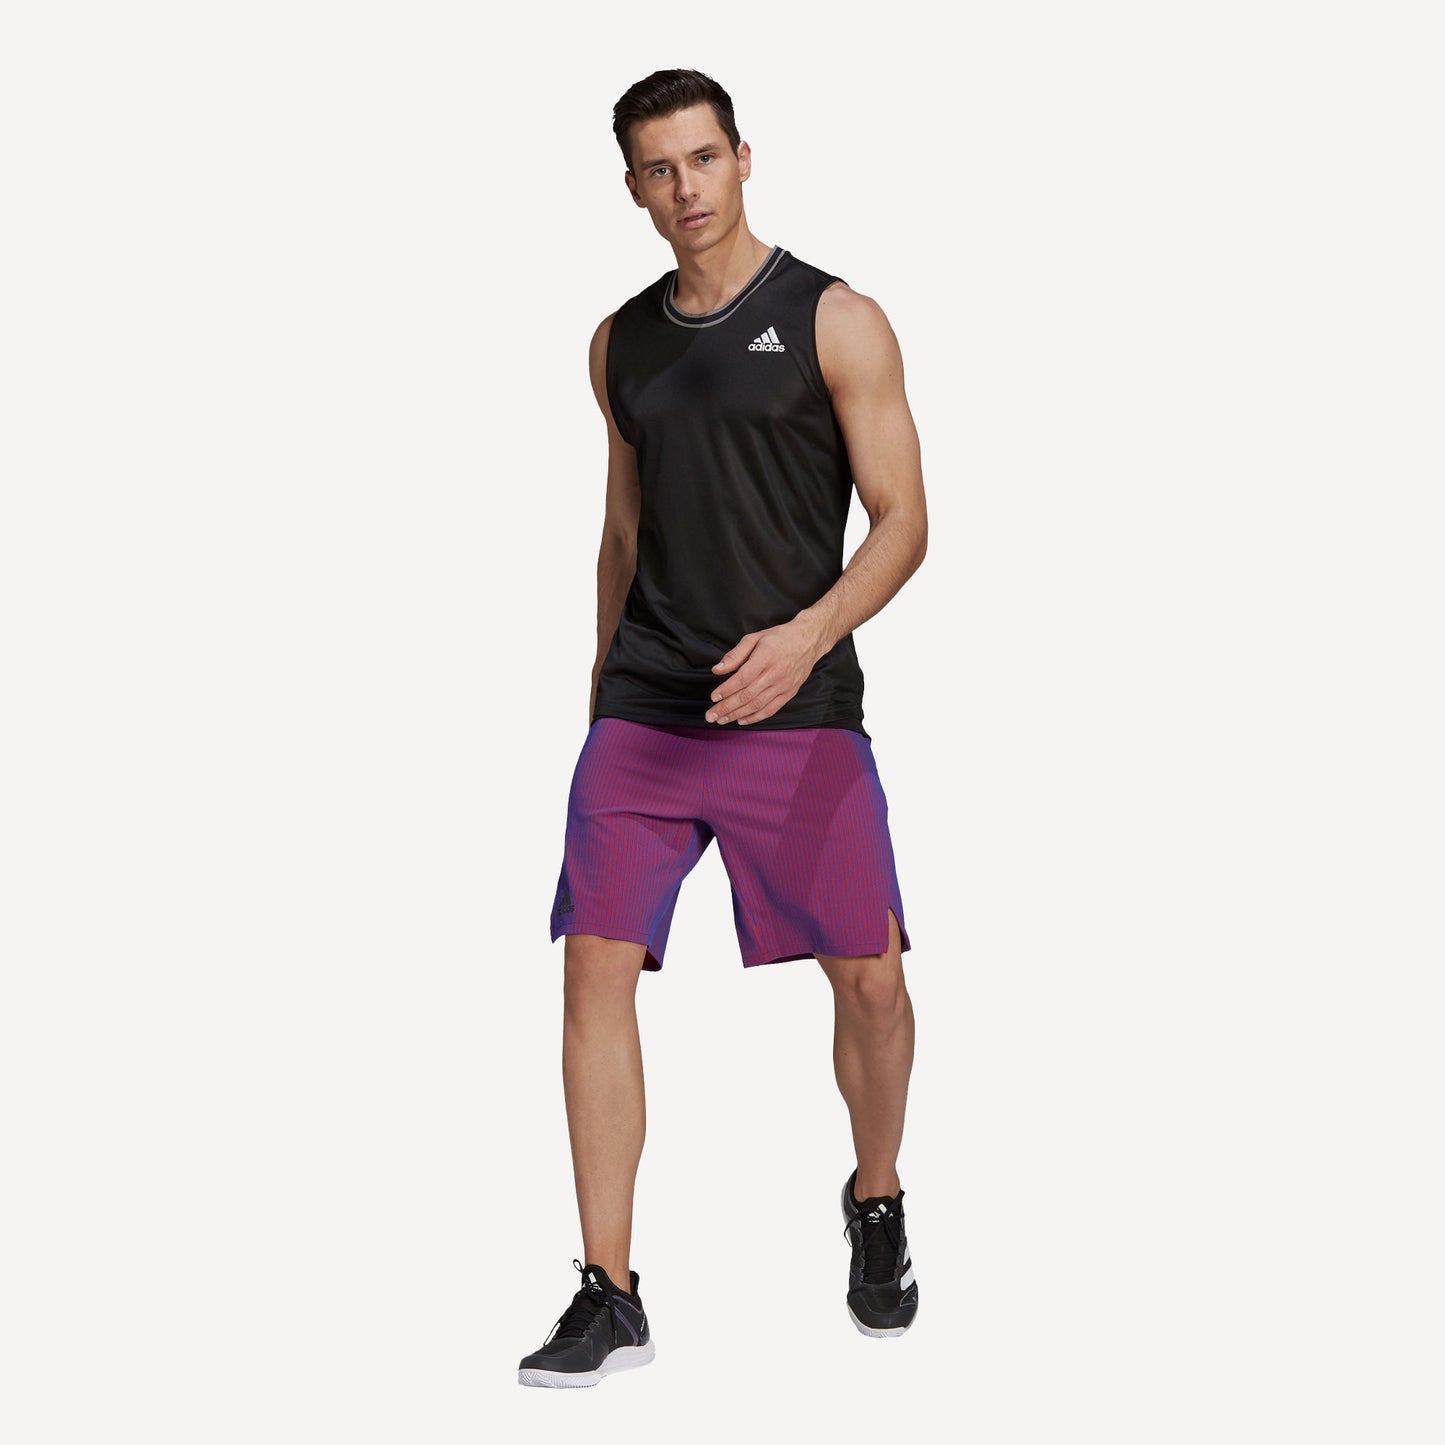 adidas Primeblue Men's Sleeveless Tennis Shirt Black (4)